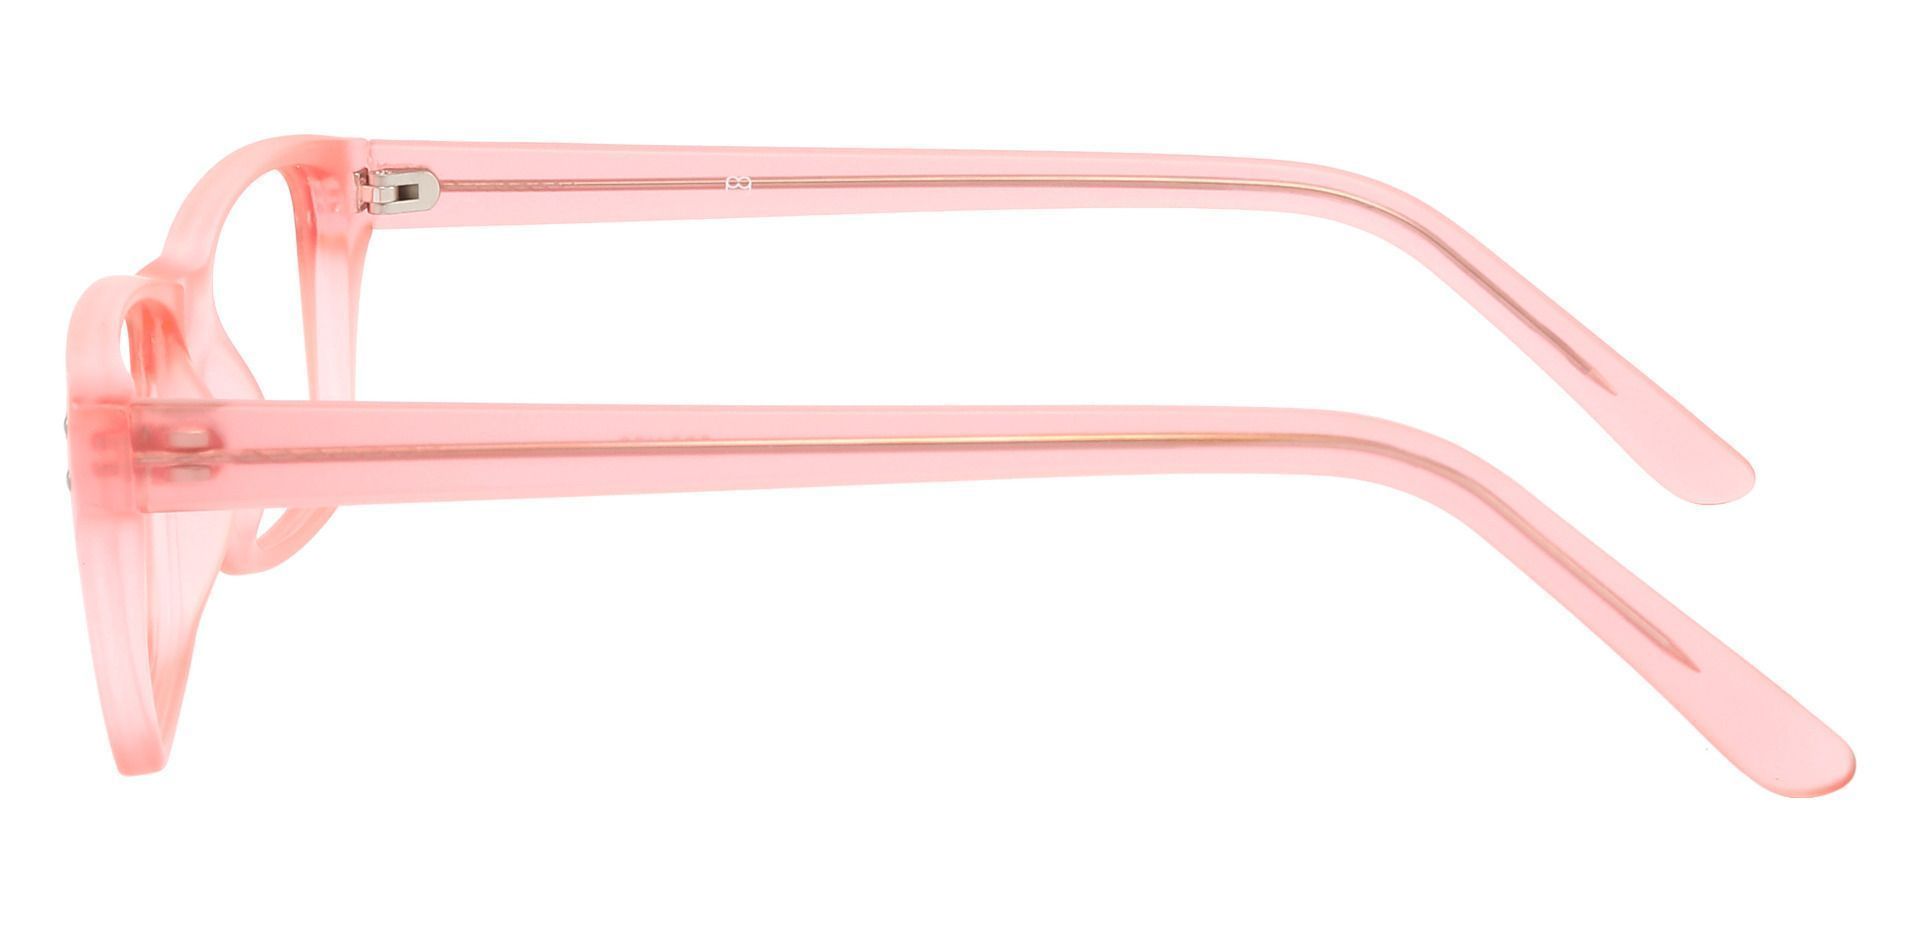 Dobbs Rectangle Progressive Glasses - Pink